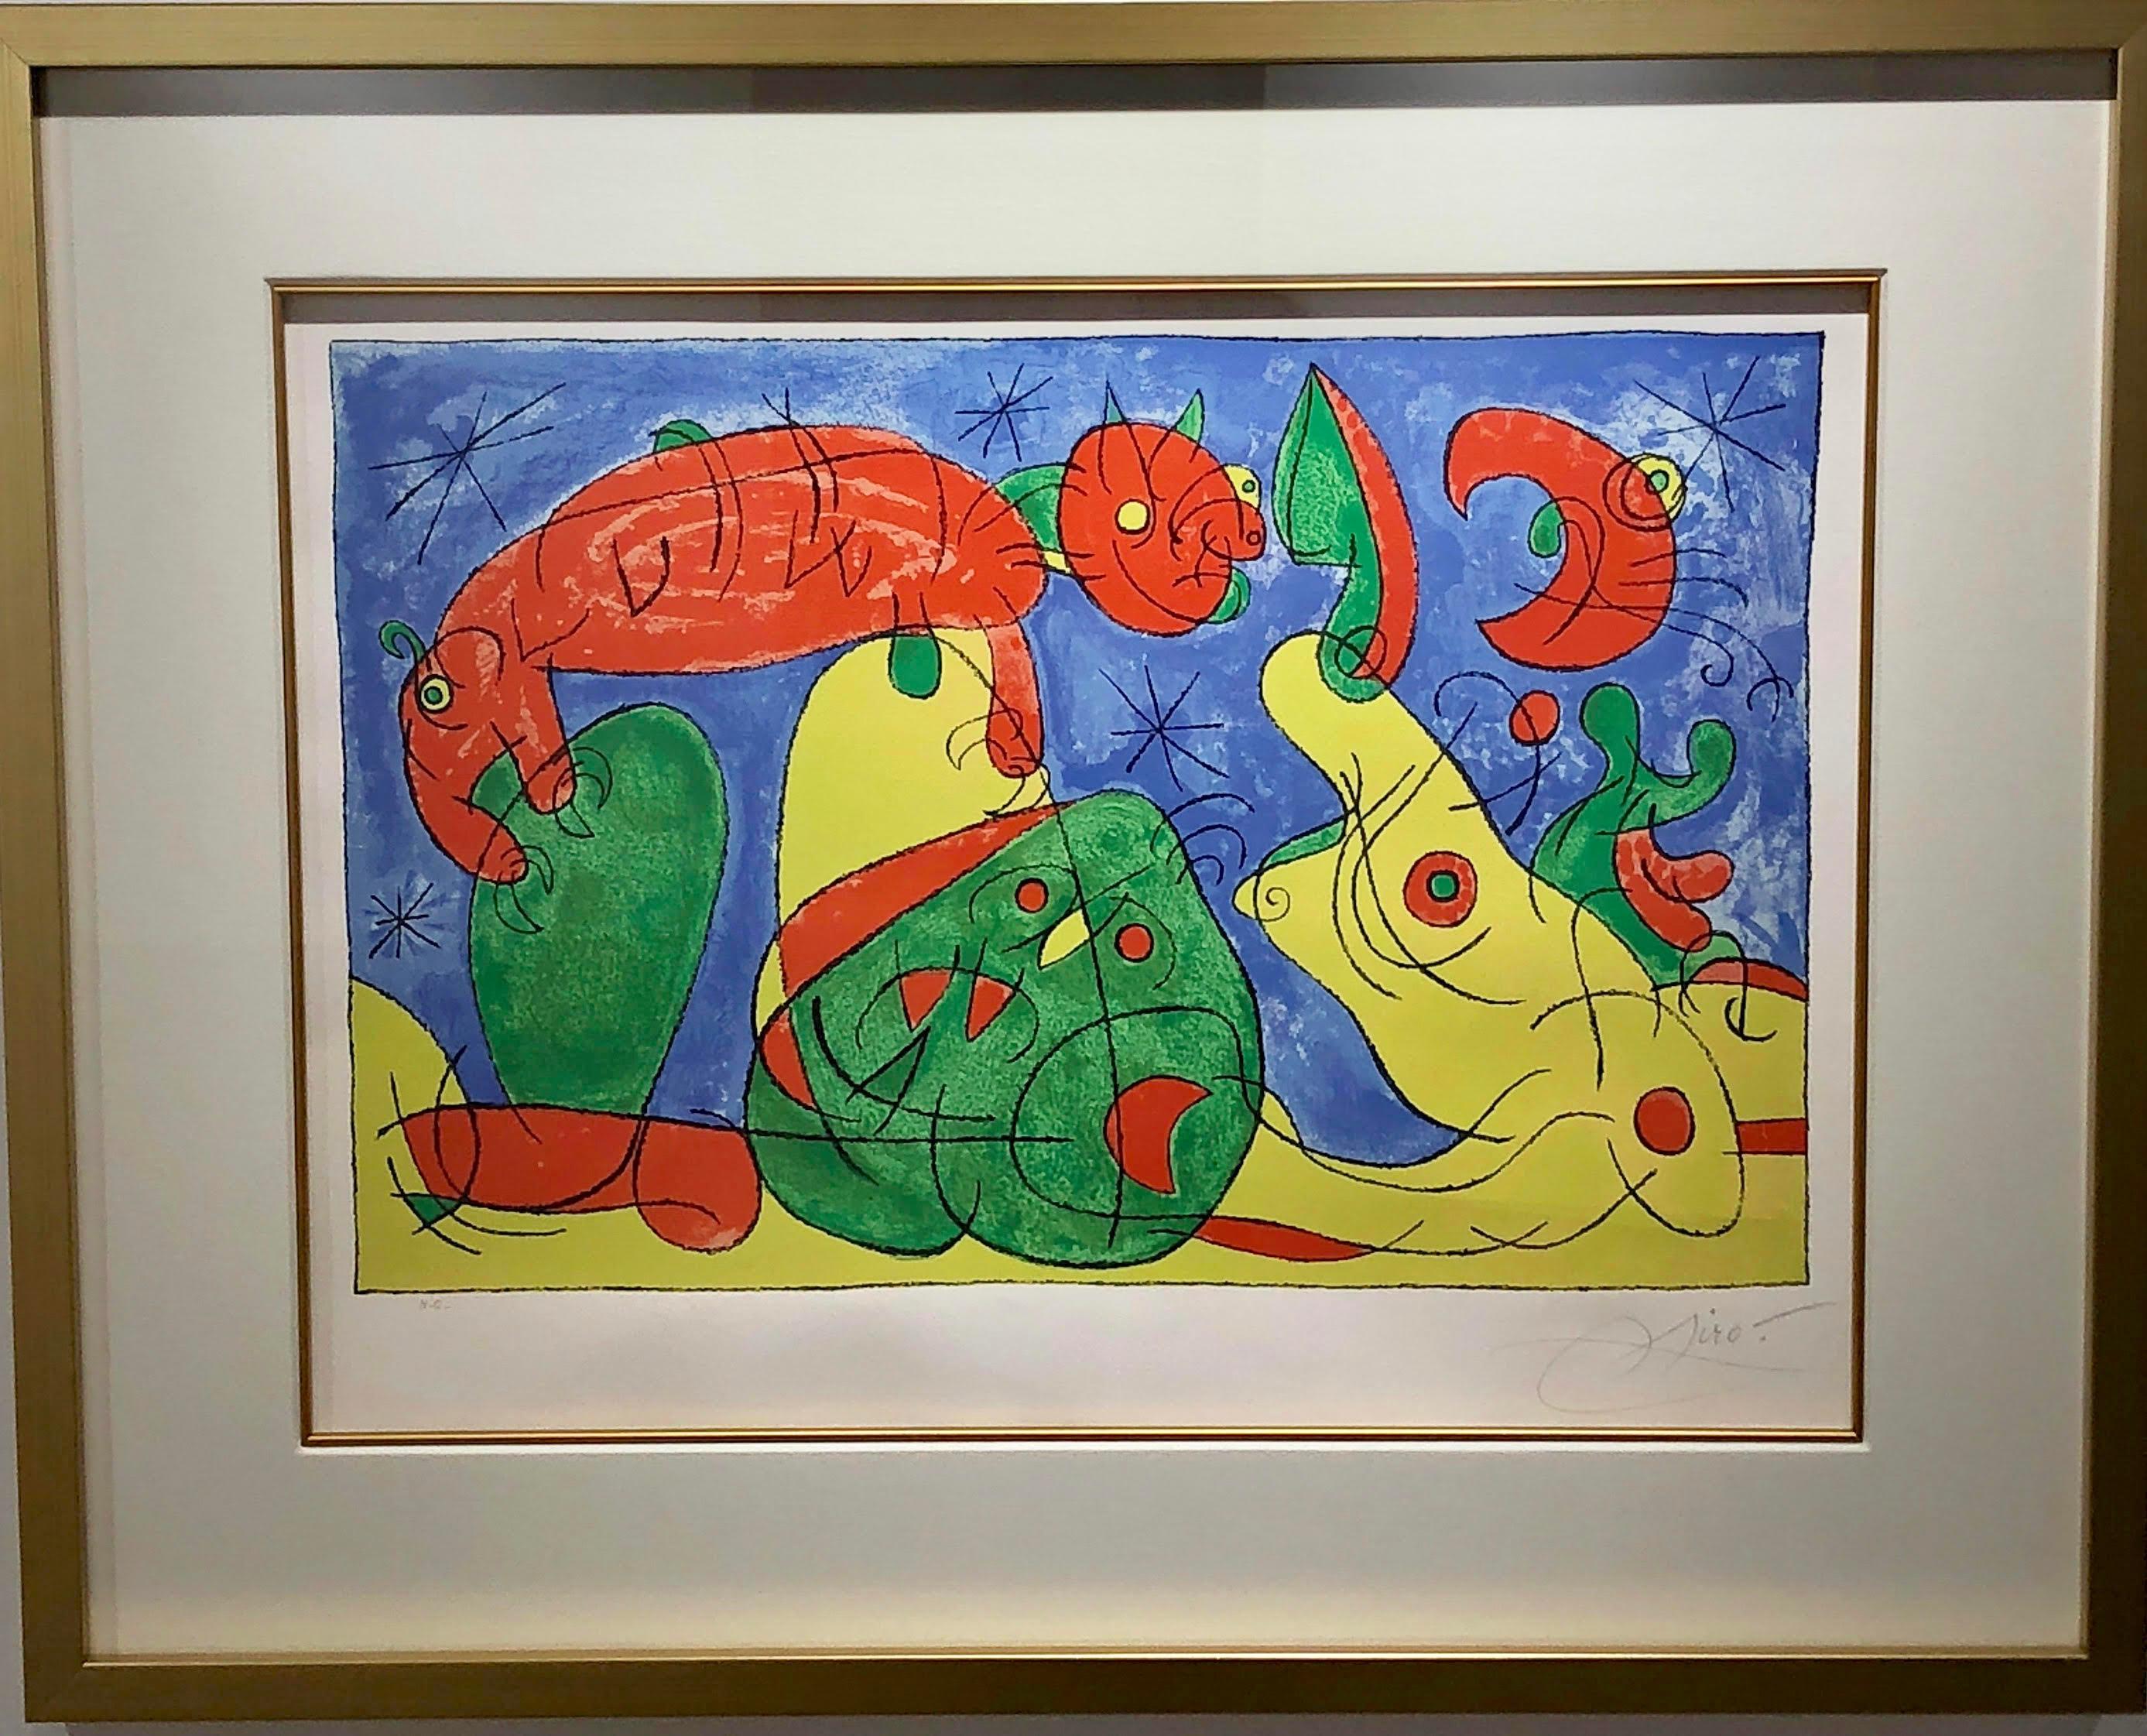 Joan Miro, Ubu Roi m.492 - Print by Joan Miró